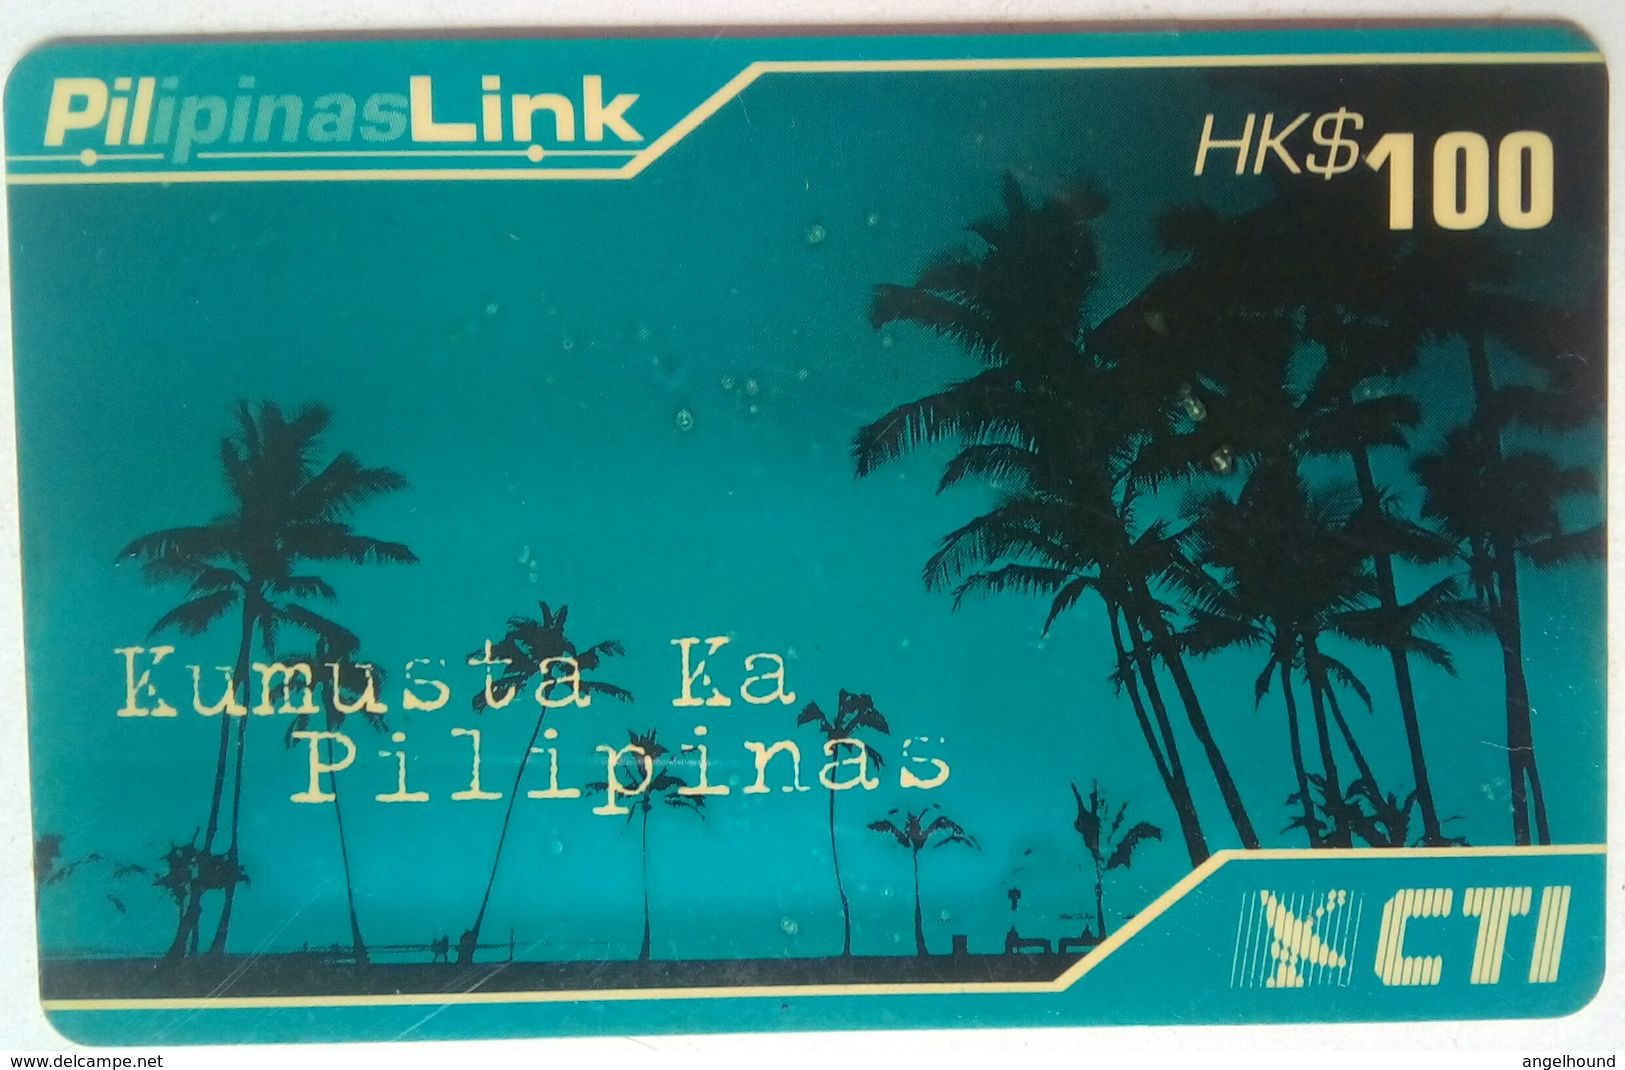 HK $100 Kumusta Ka Pilipinas Link Issued For Overseas Filipino Workers In HK - Philippines